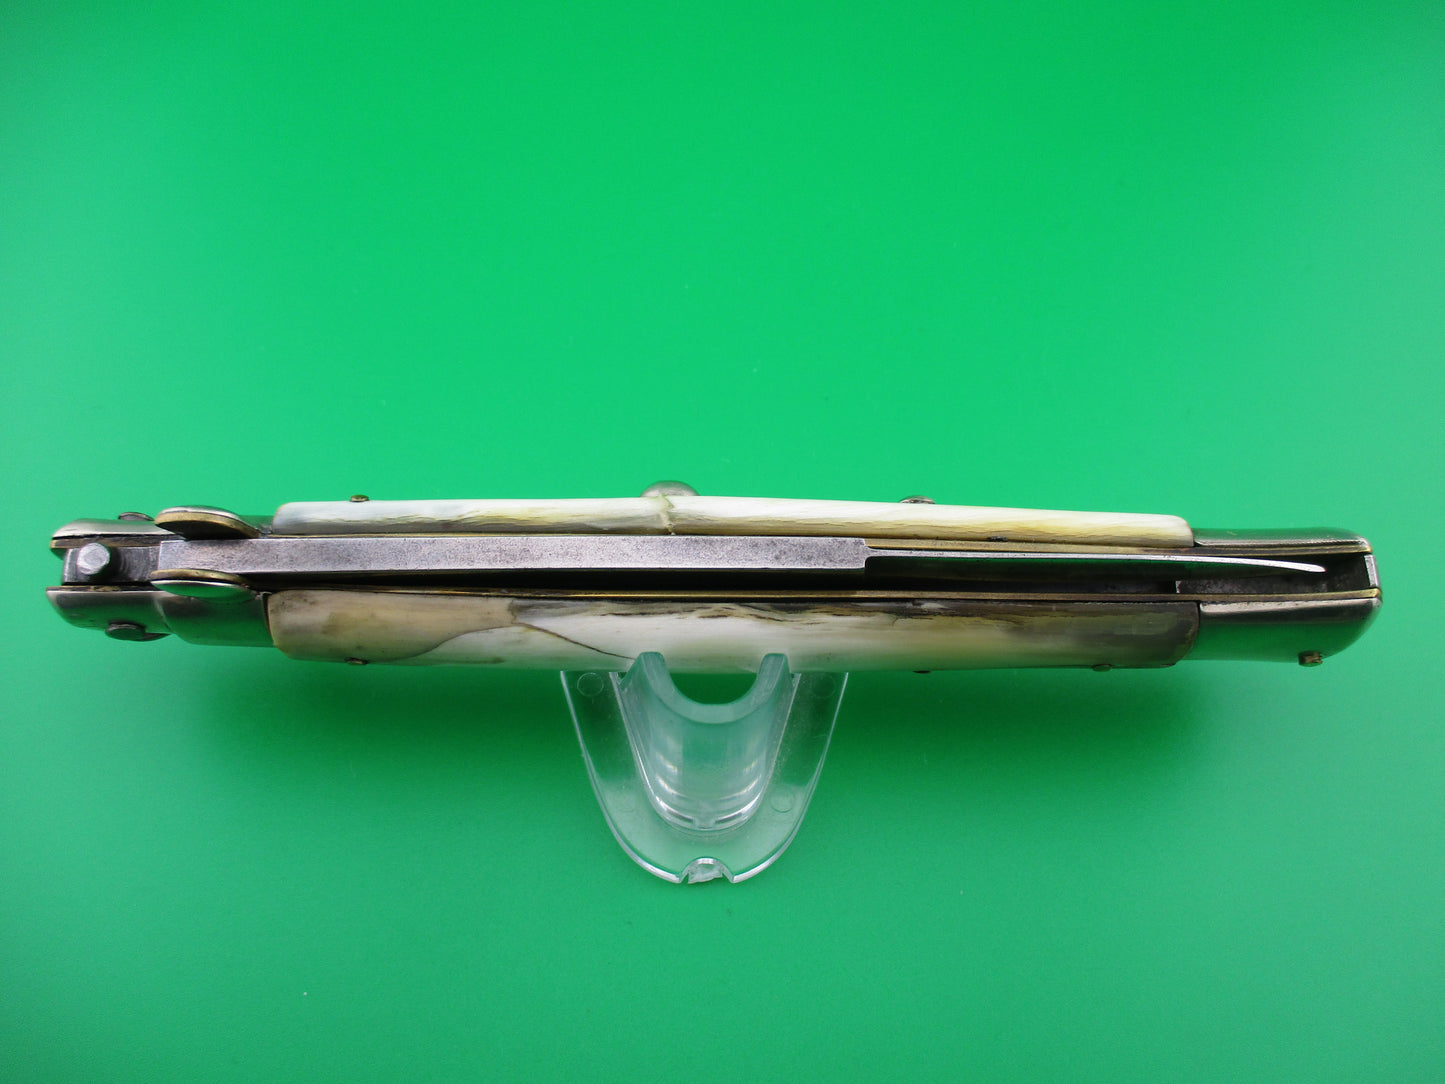 WANDY MADE ITALY 28cm Italian Picklock 1950s vintage automatic knife